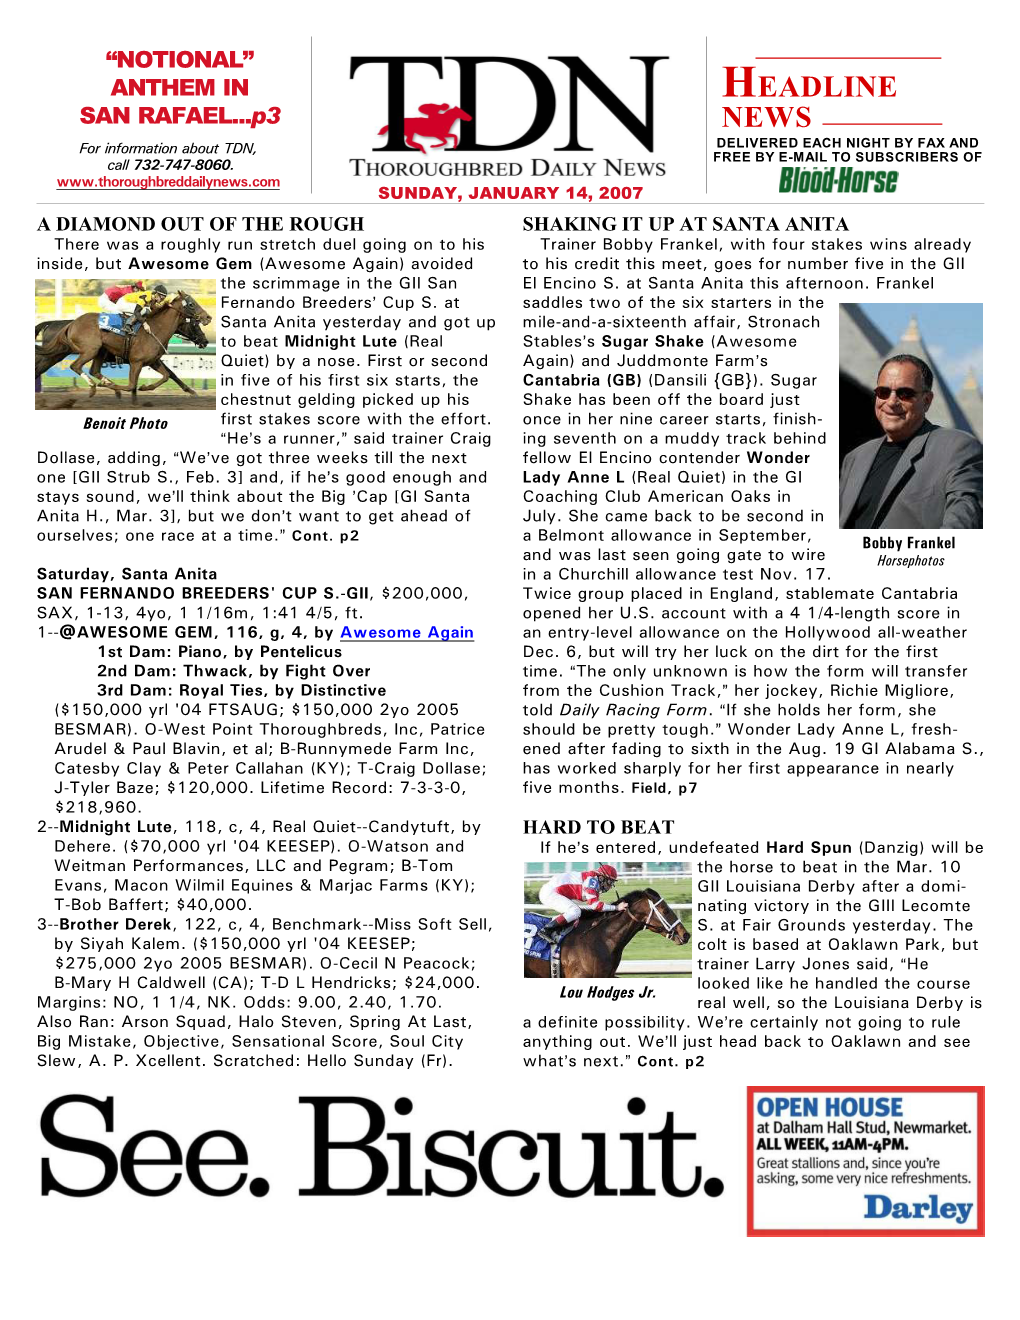 HEADLINE NEWS • 1/14/07 • PAGE 2 of 8